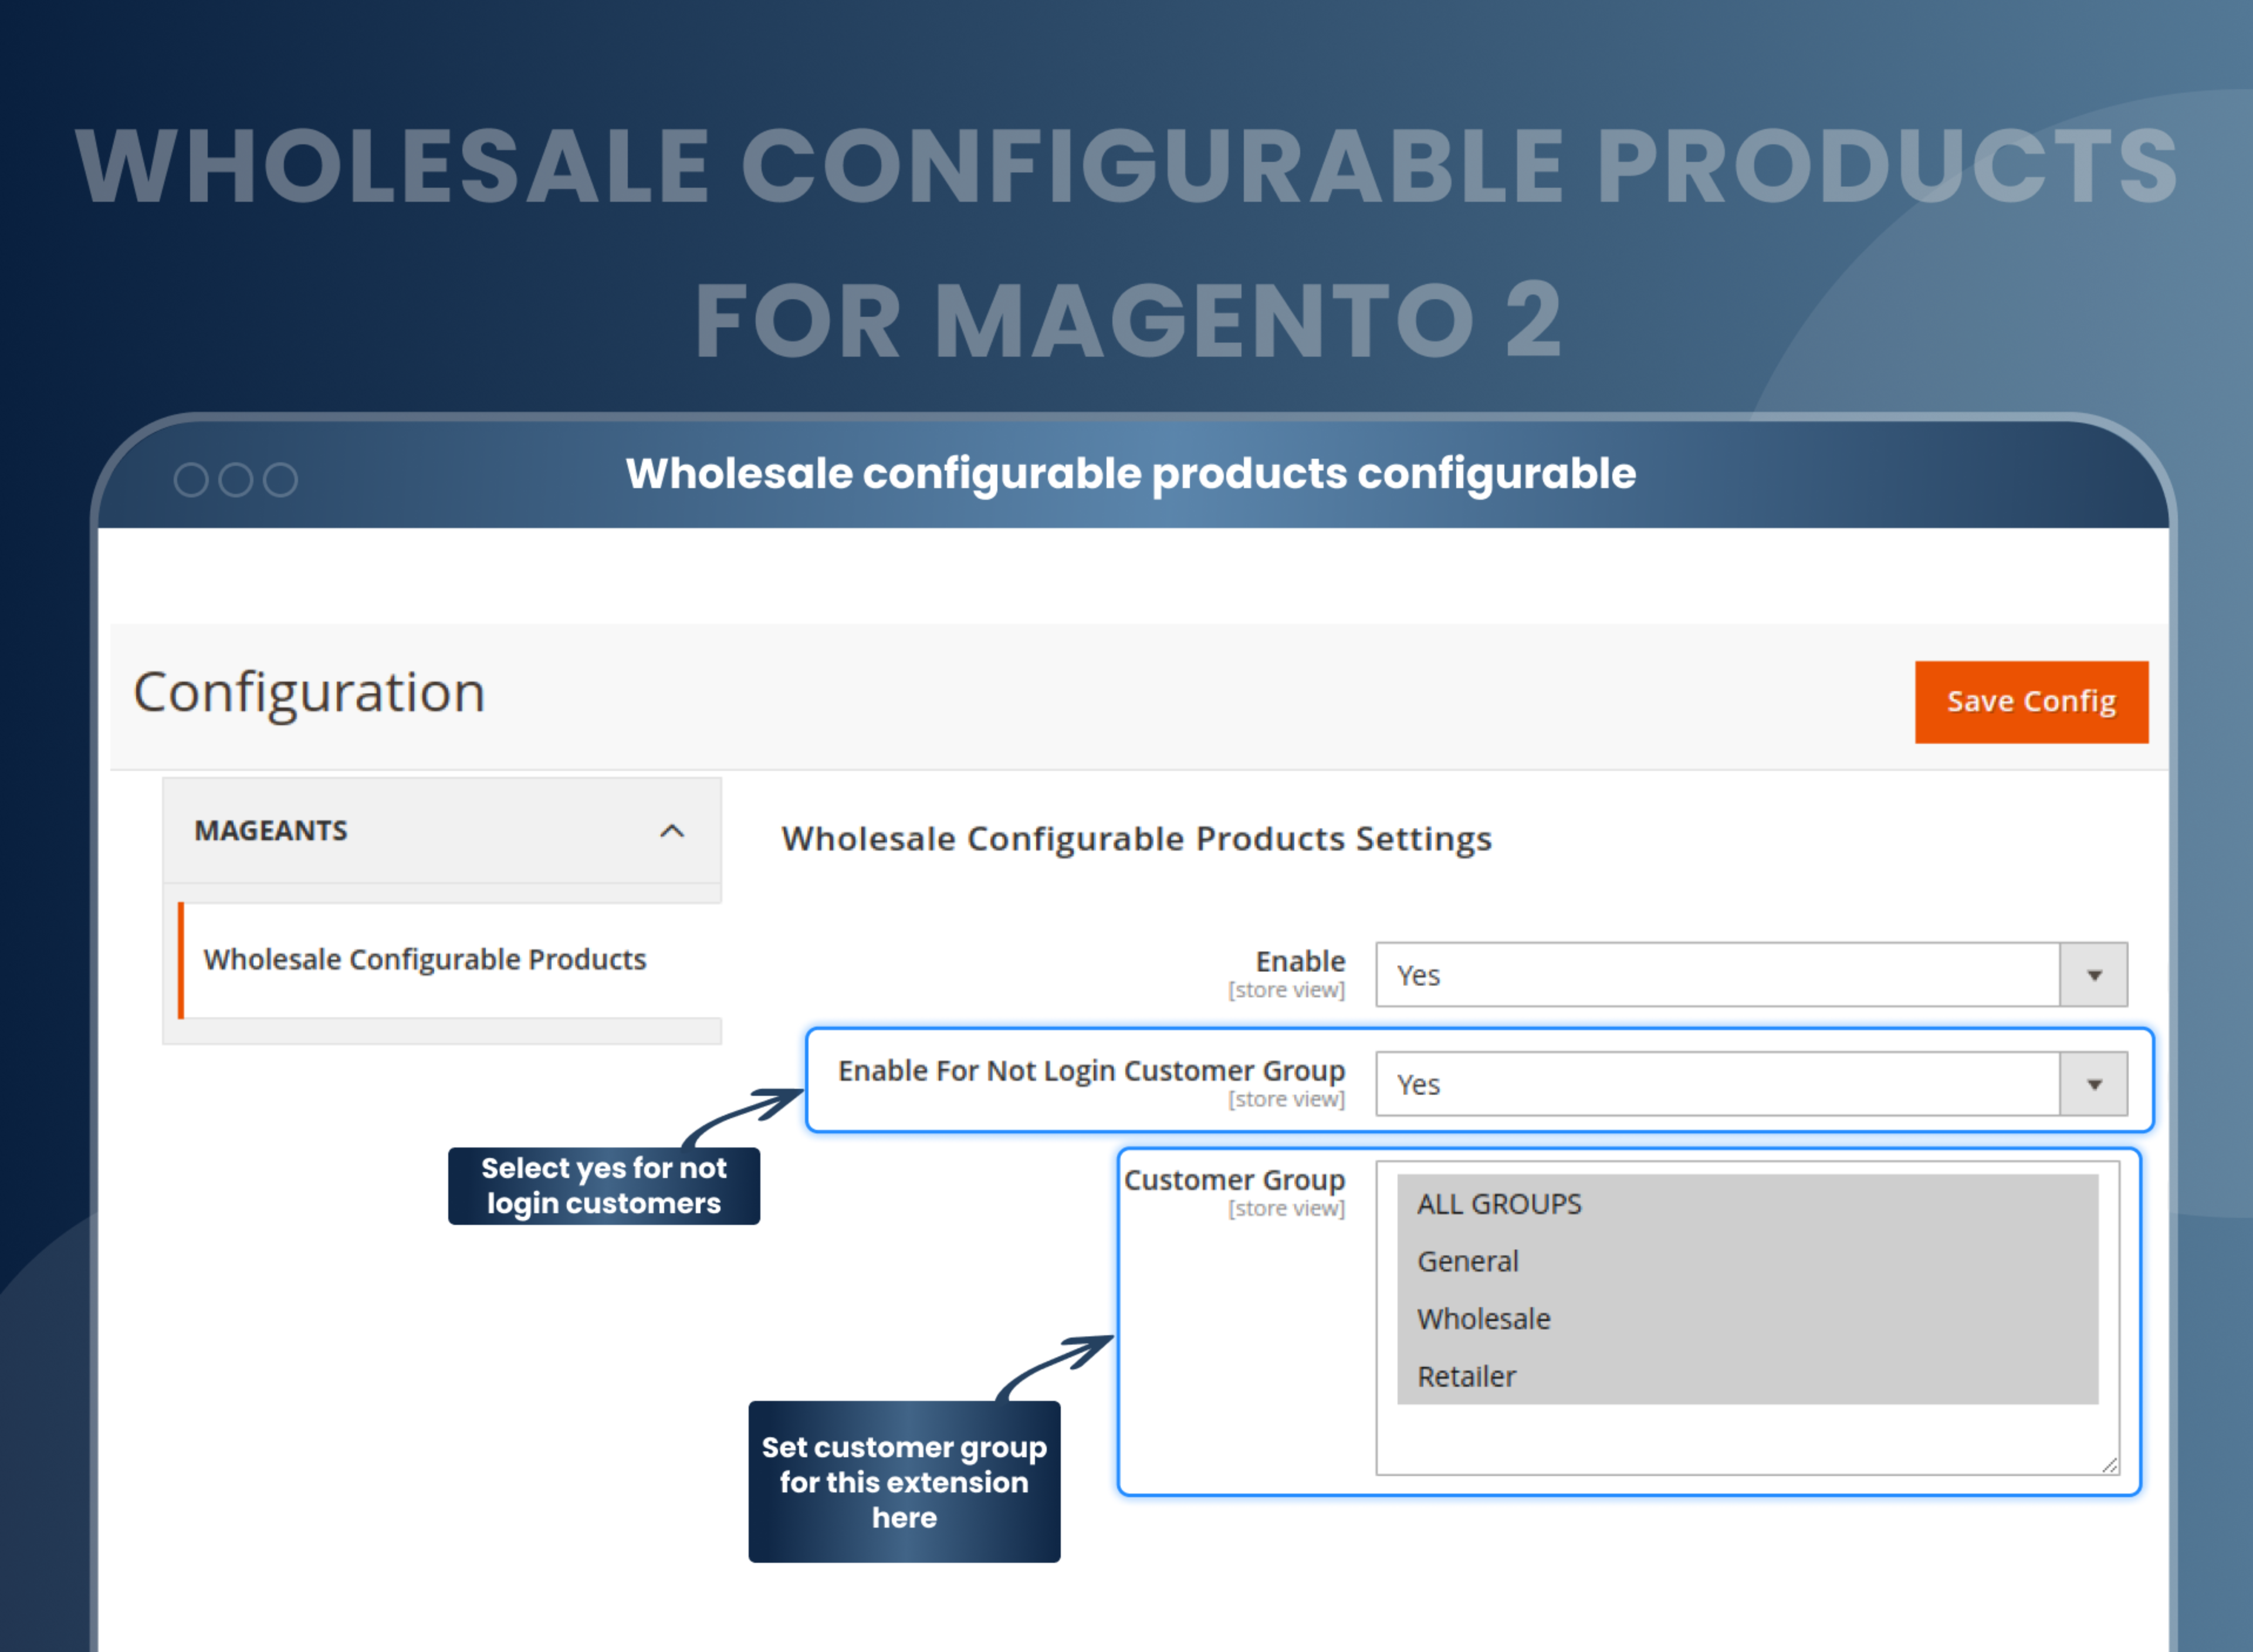  Wholesale configurable products configurable